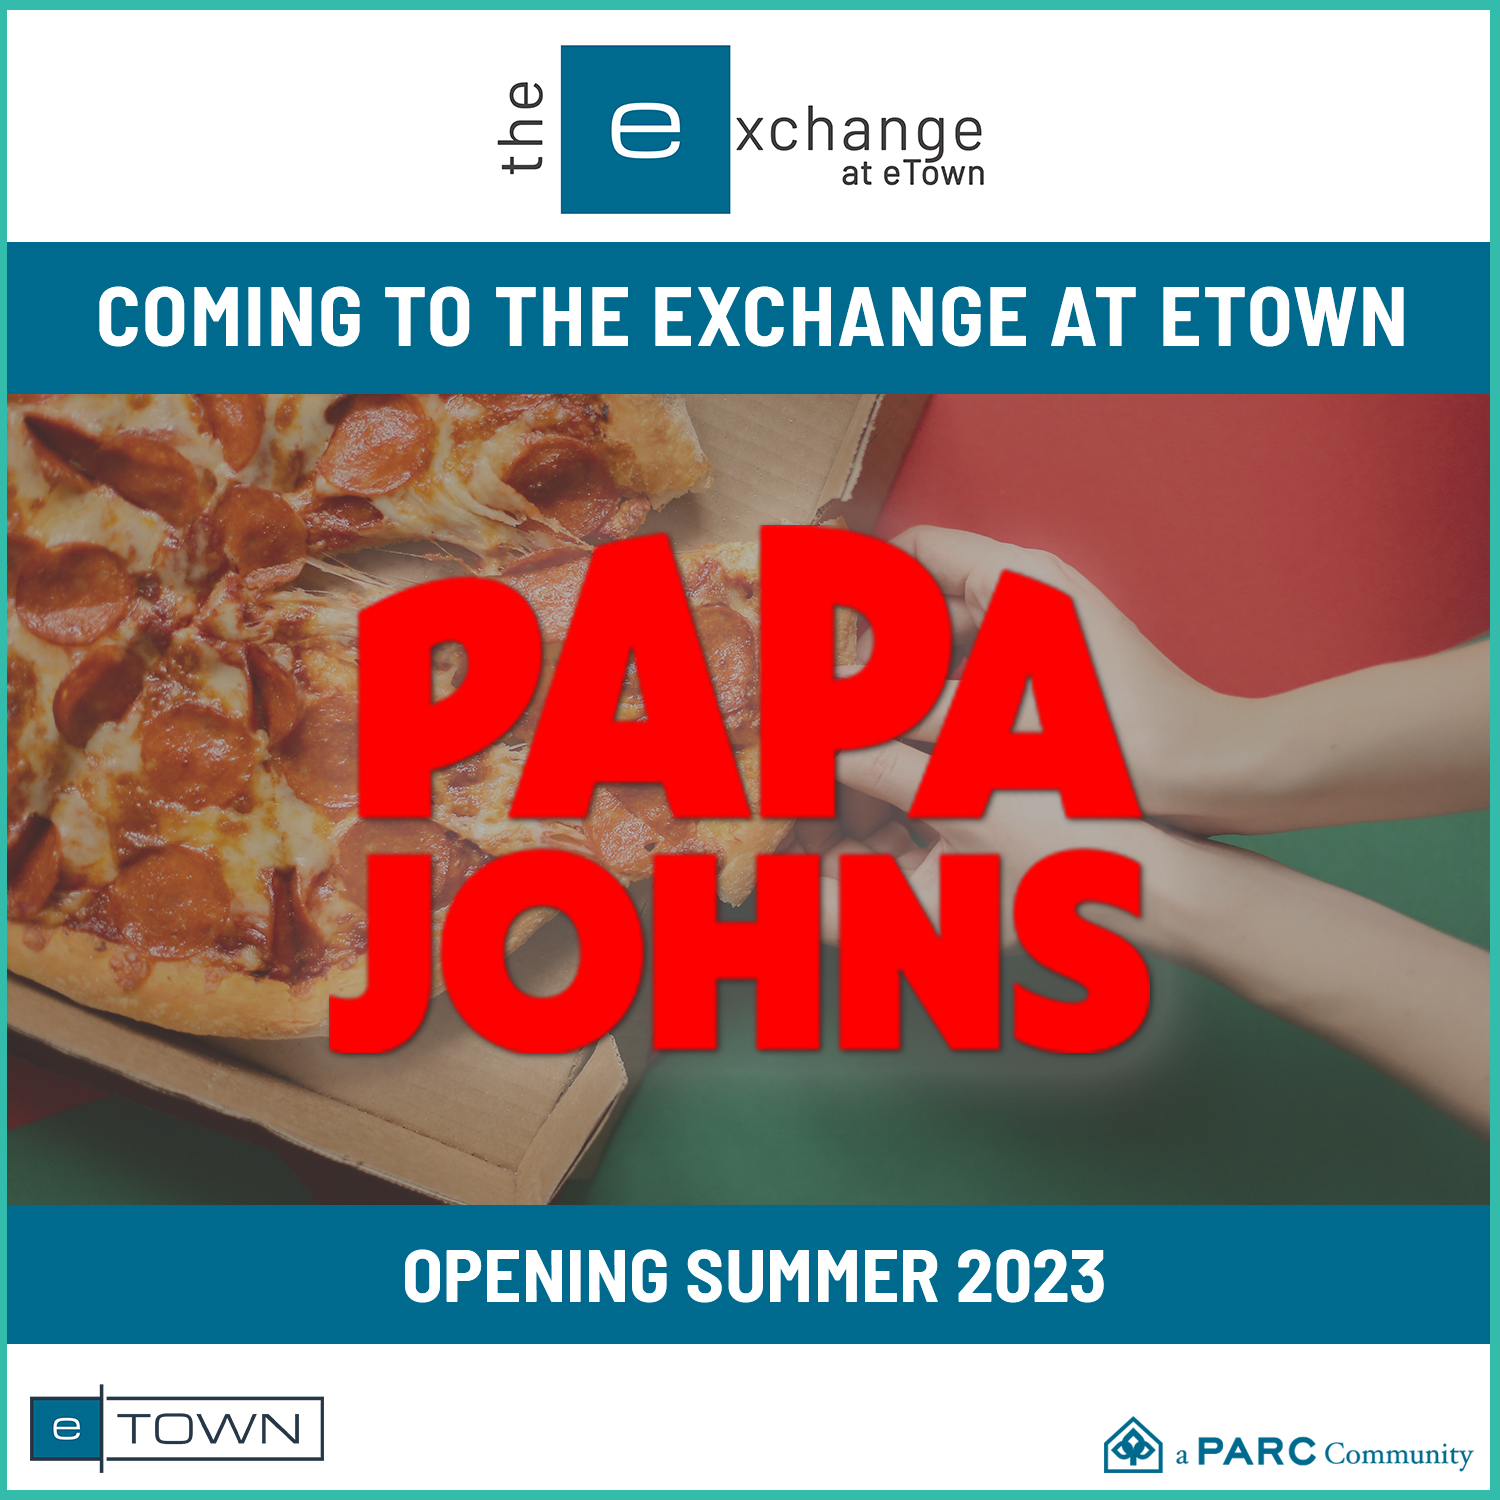 Papa John's Pizza - St. Augustine, FL